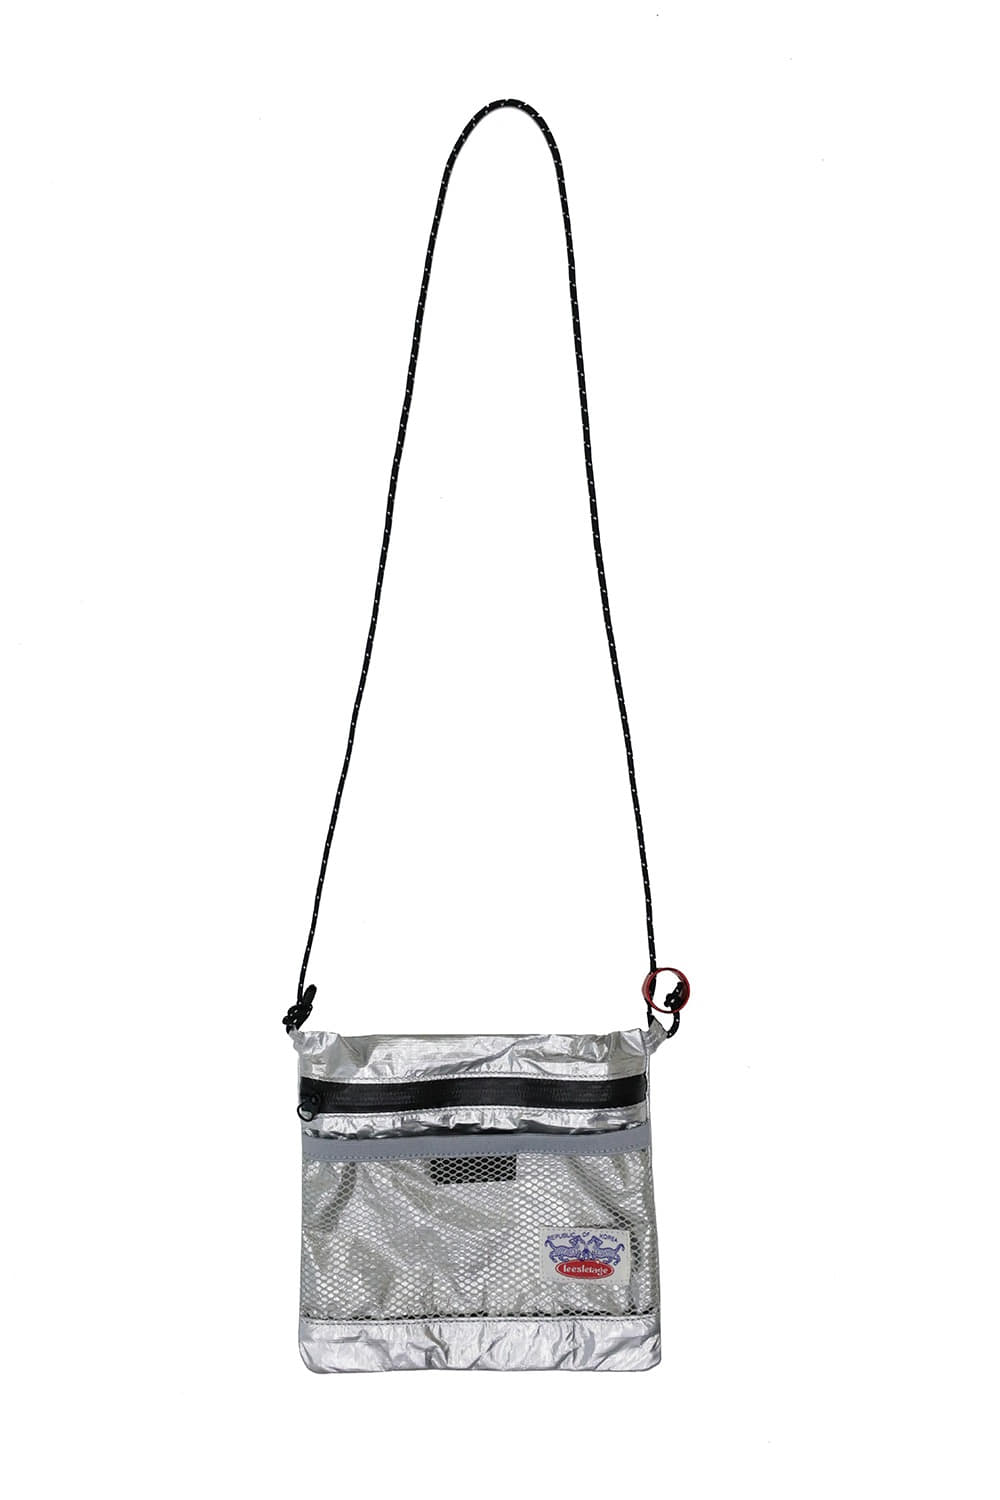 [Leesletage] Tyvek Silver Shoulder Bag